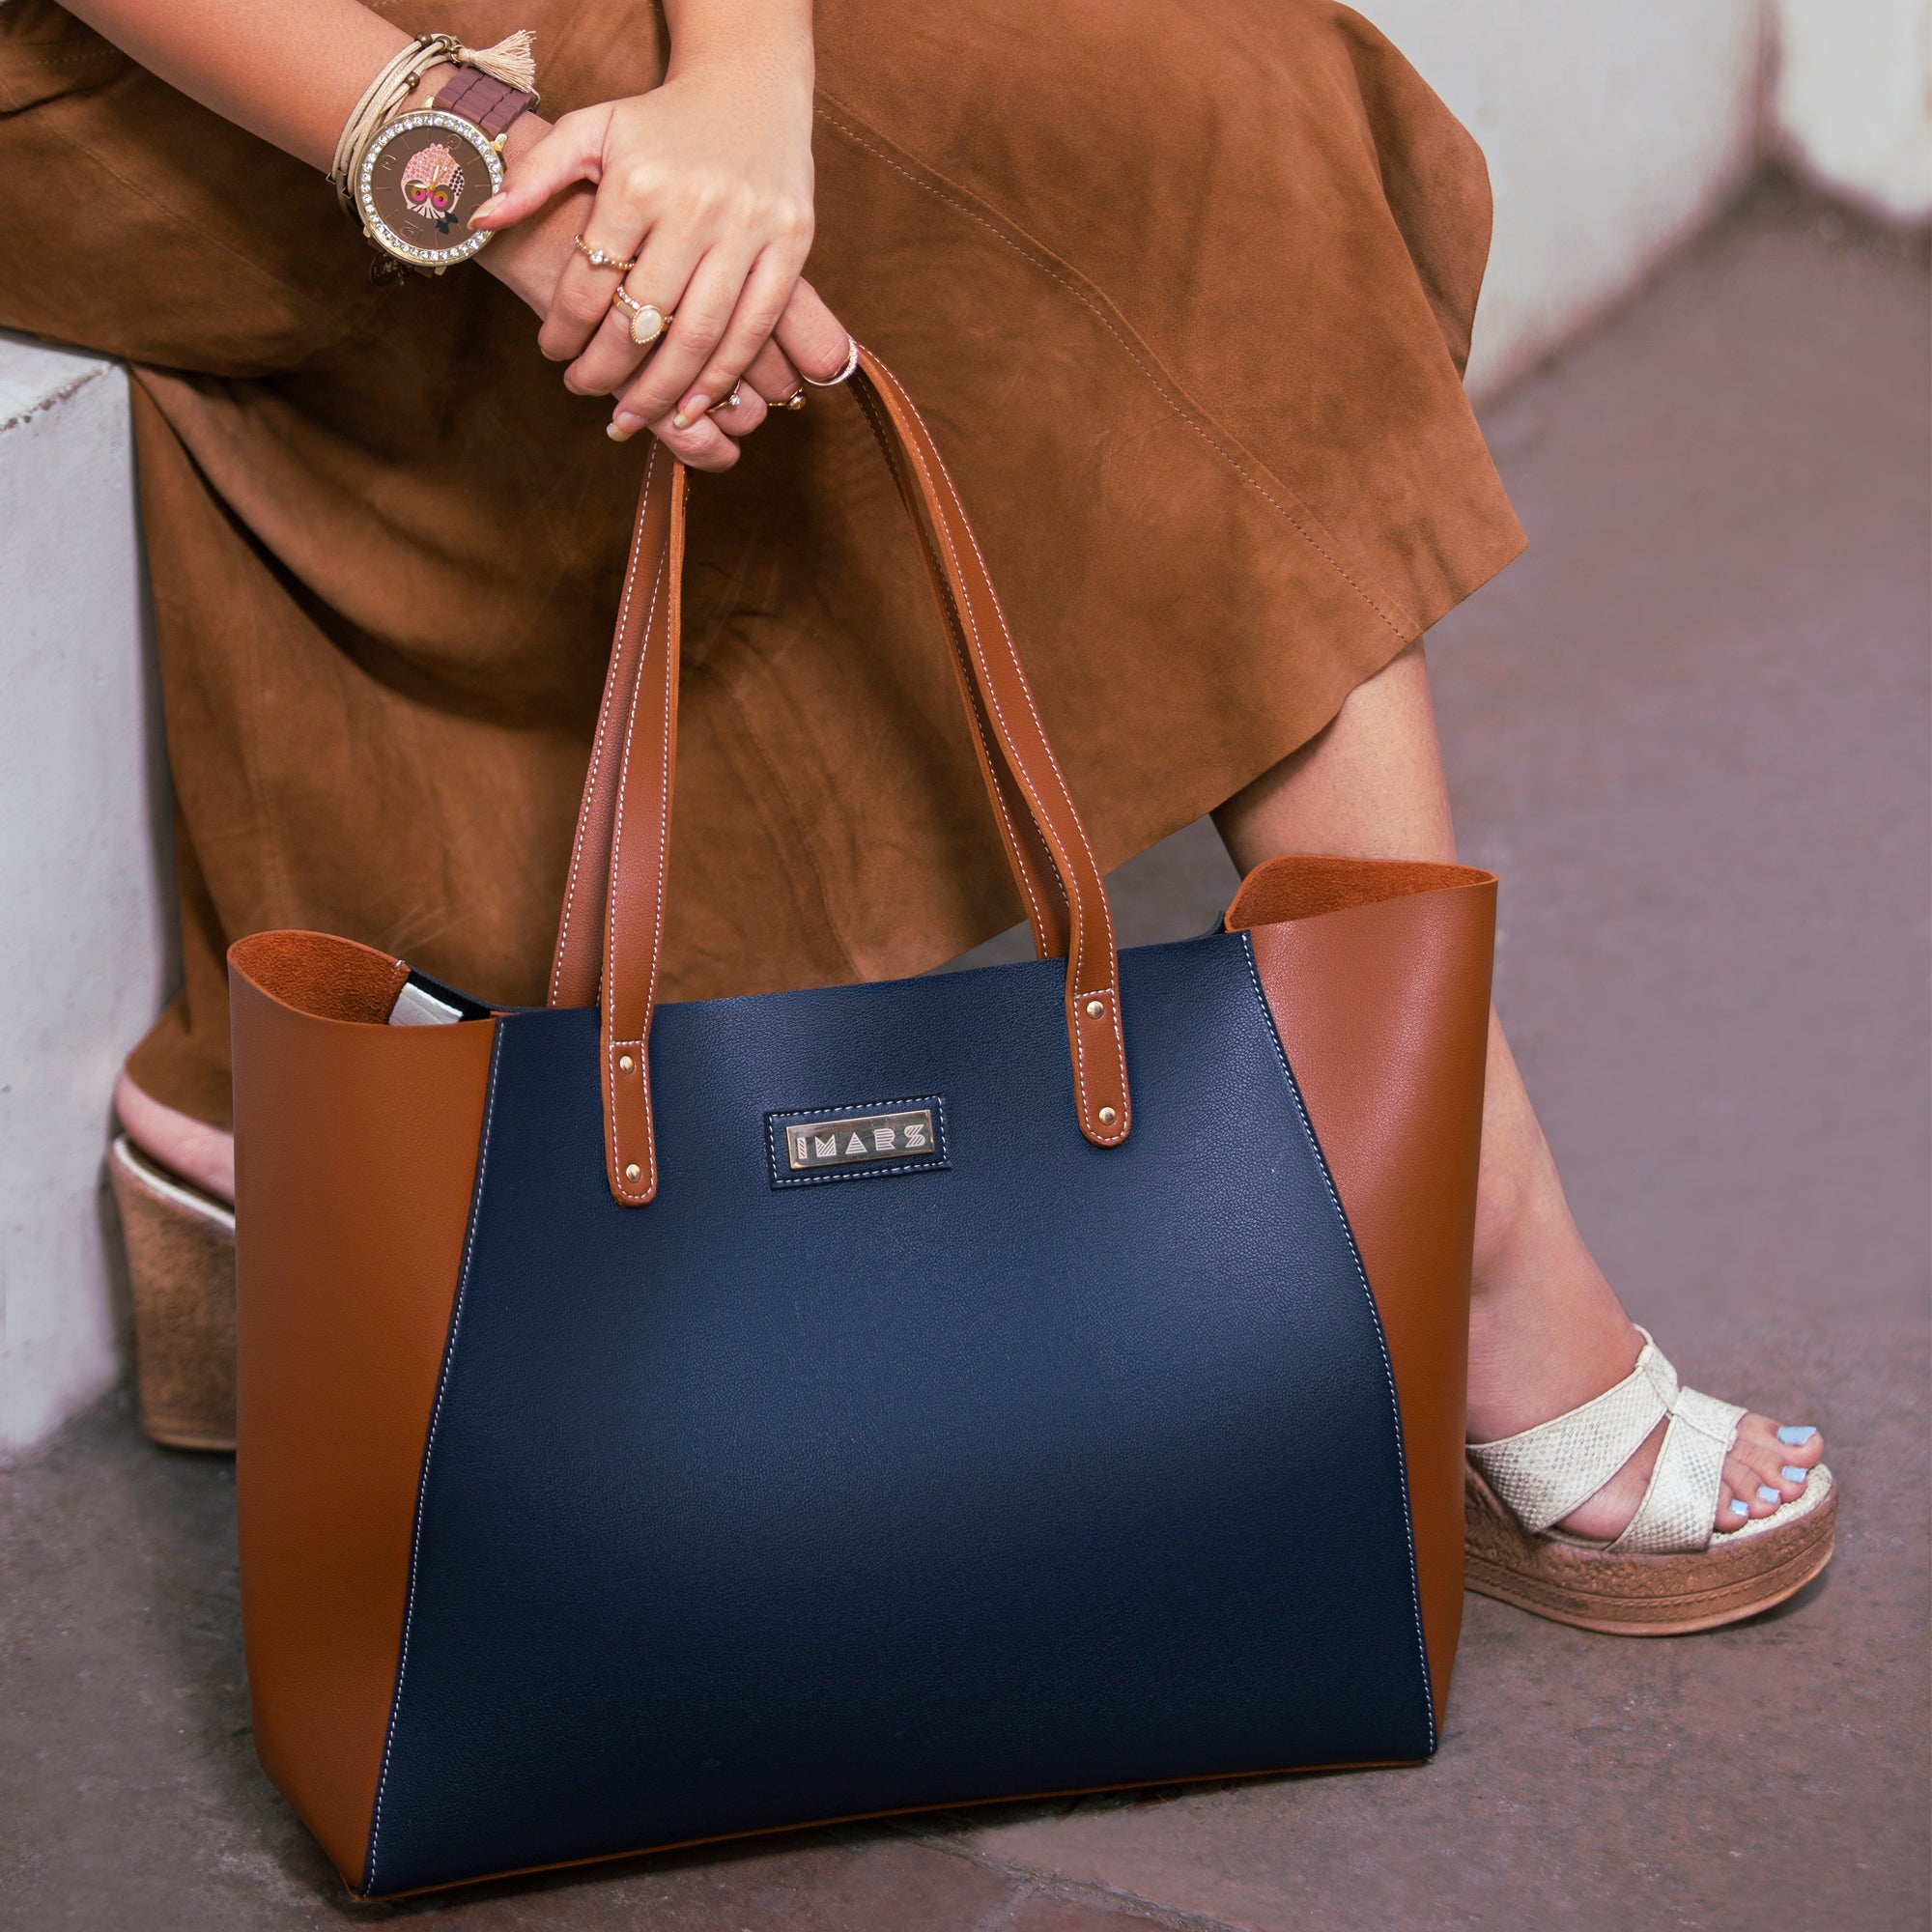 Elegant Blue Tan Handbag Perfect For Women & Girls